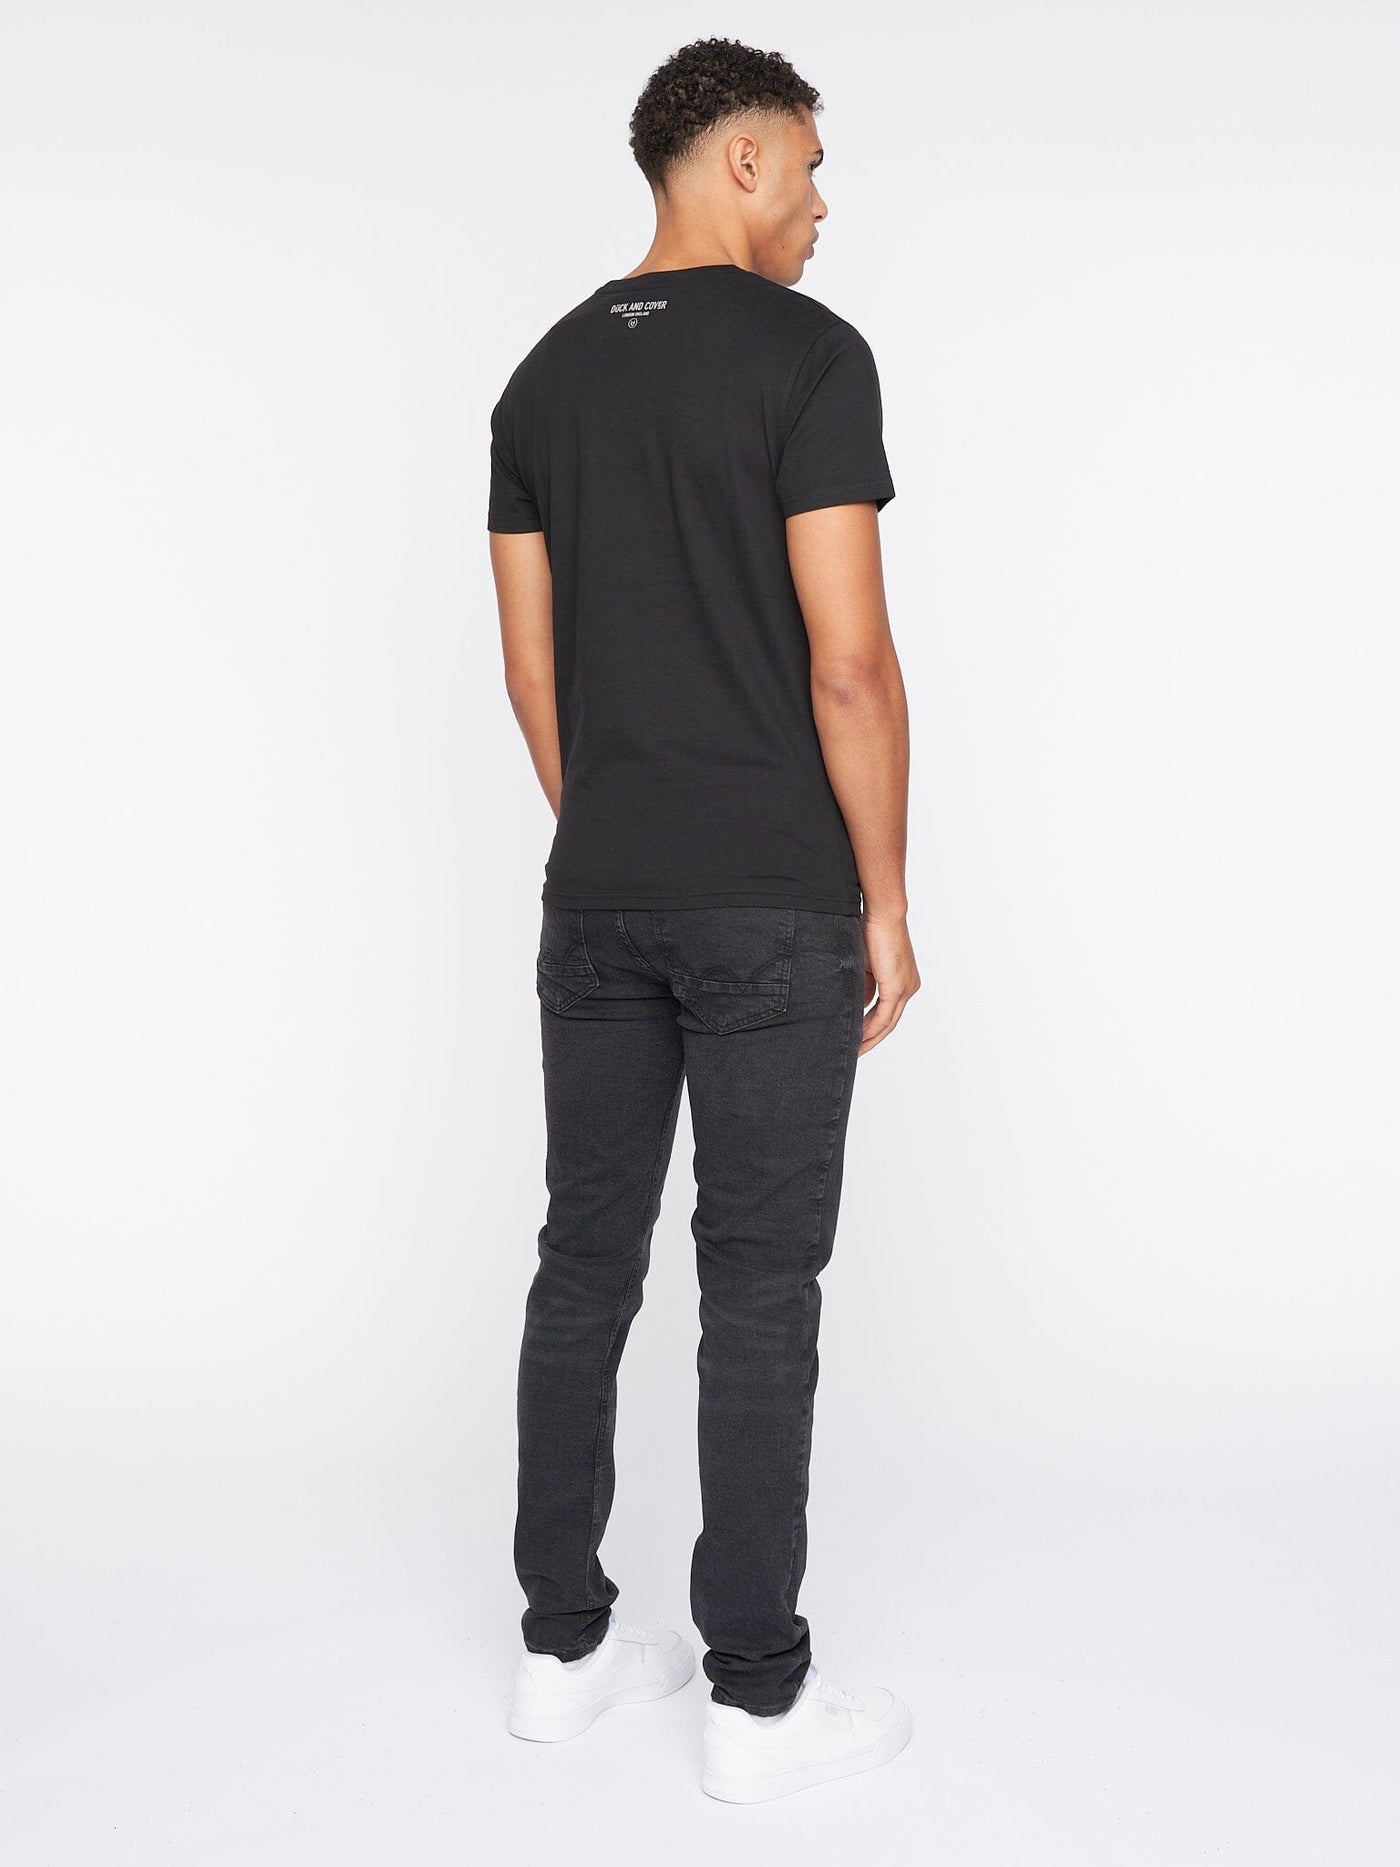 Camoville T-Shirt Black